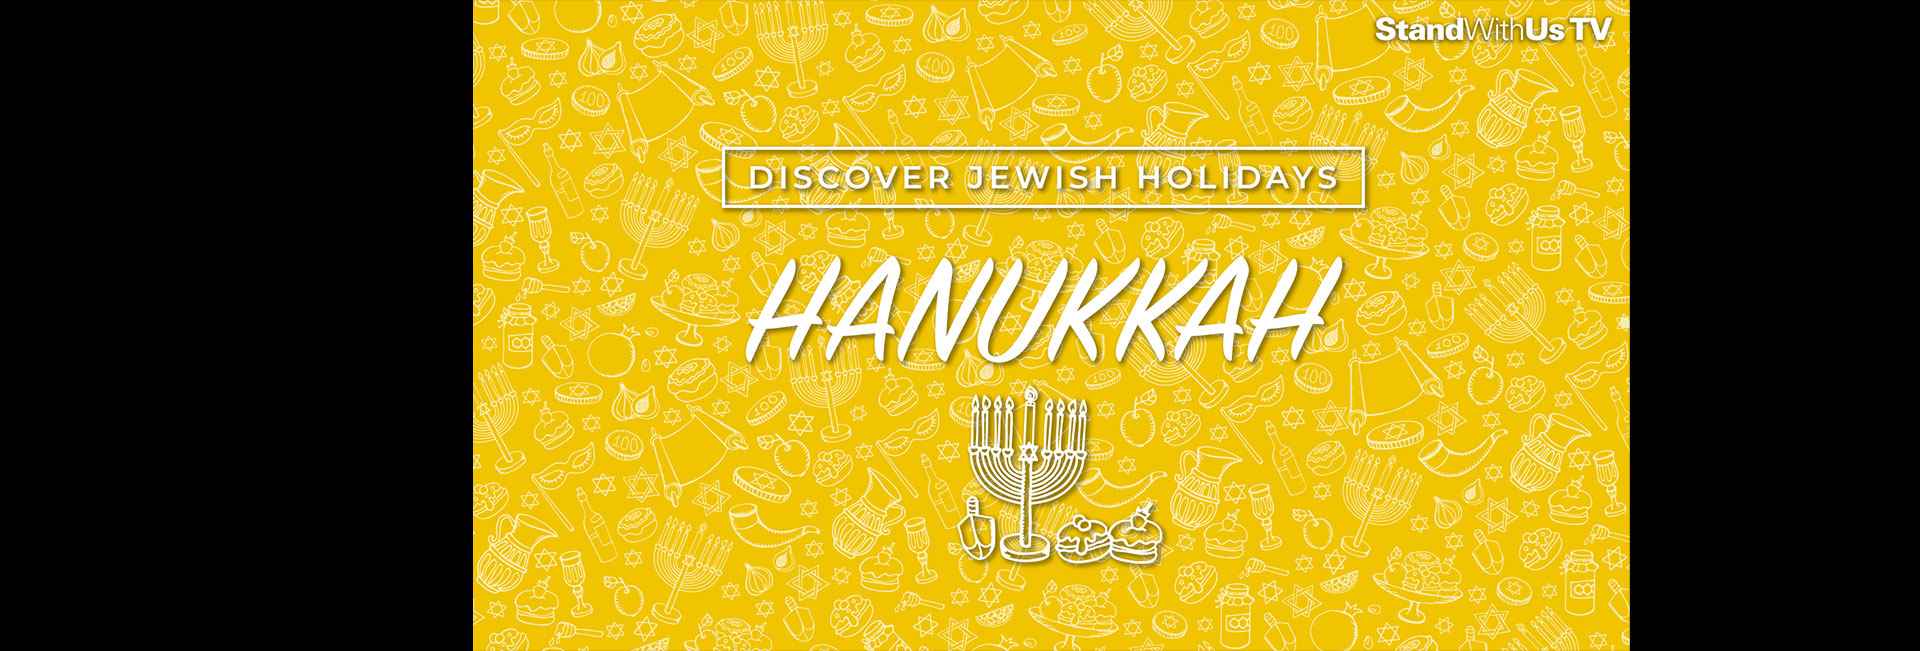 Discover Jewish Holidays: Hannukah